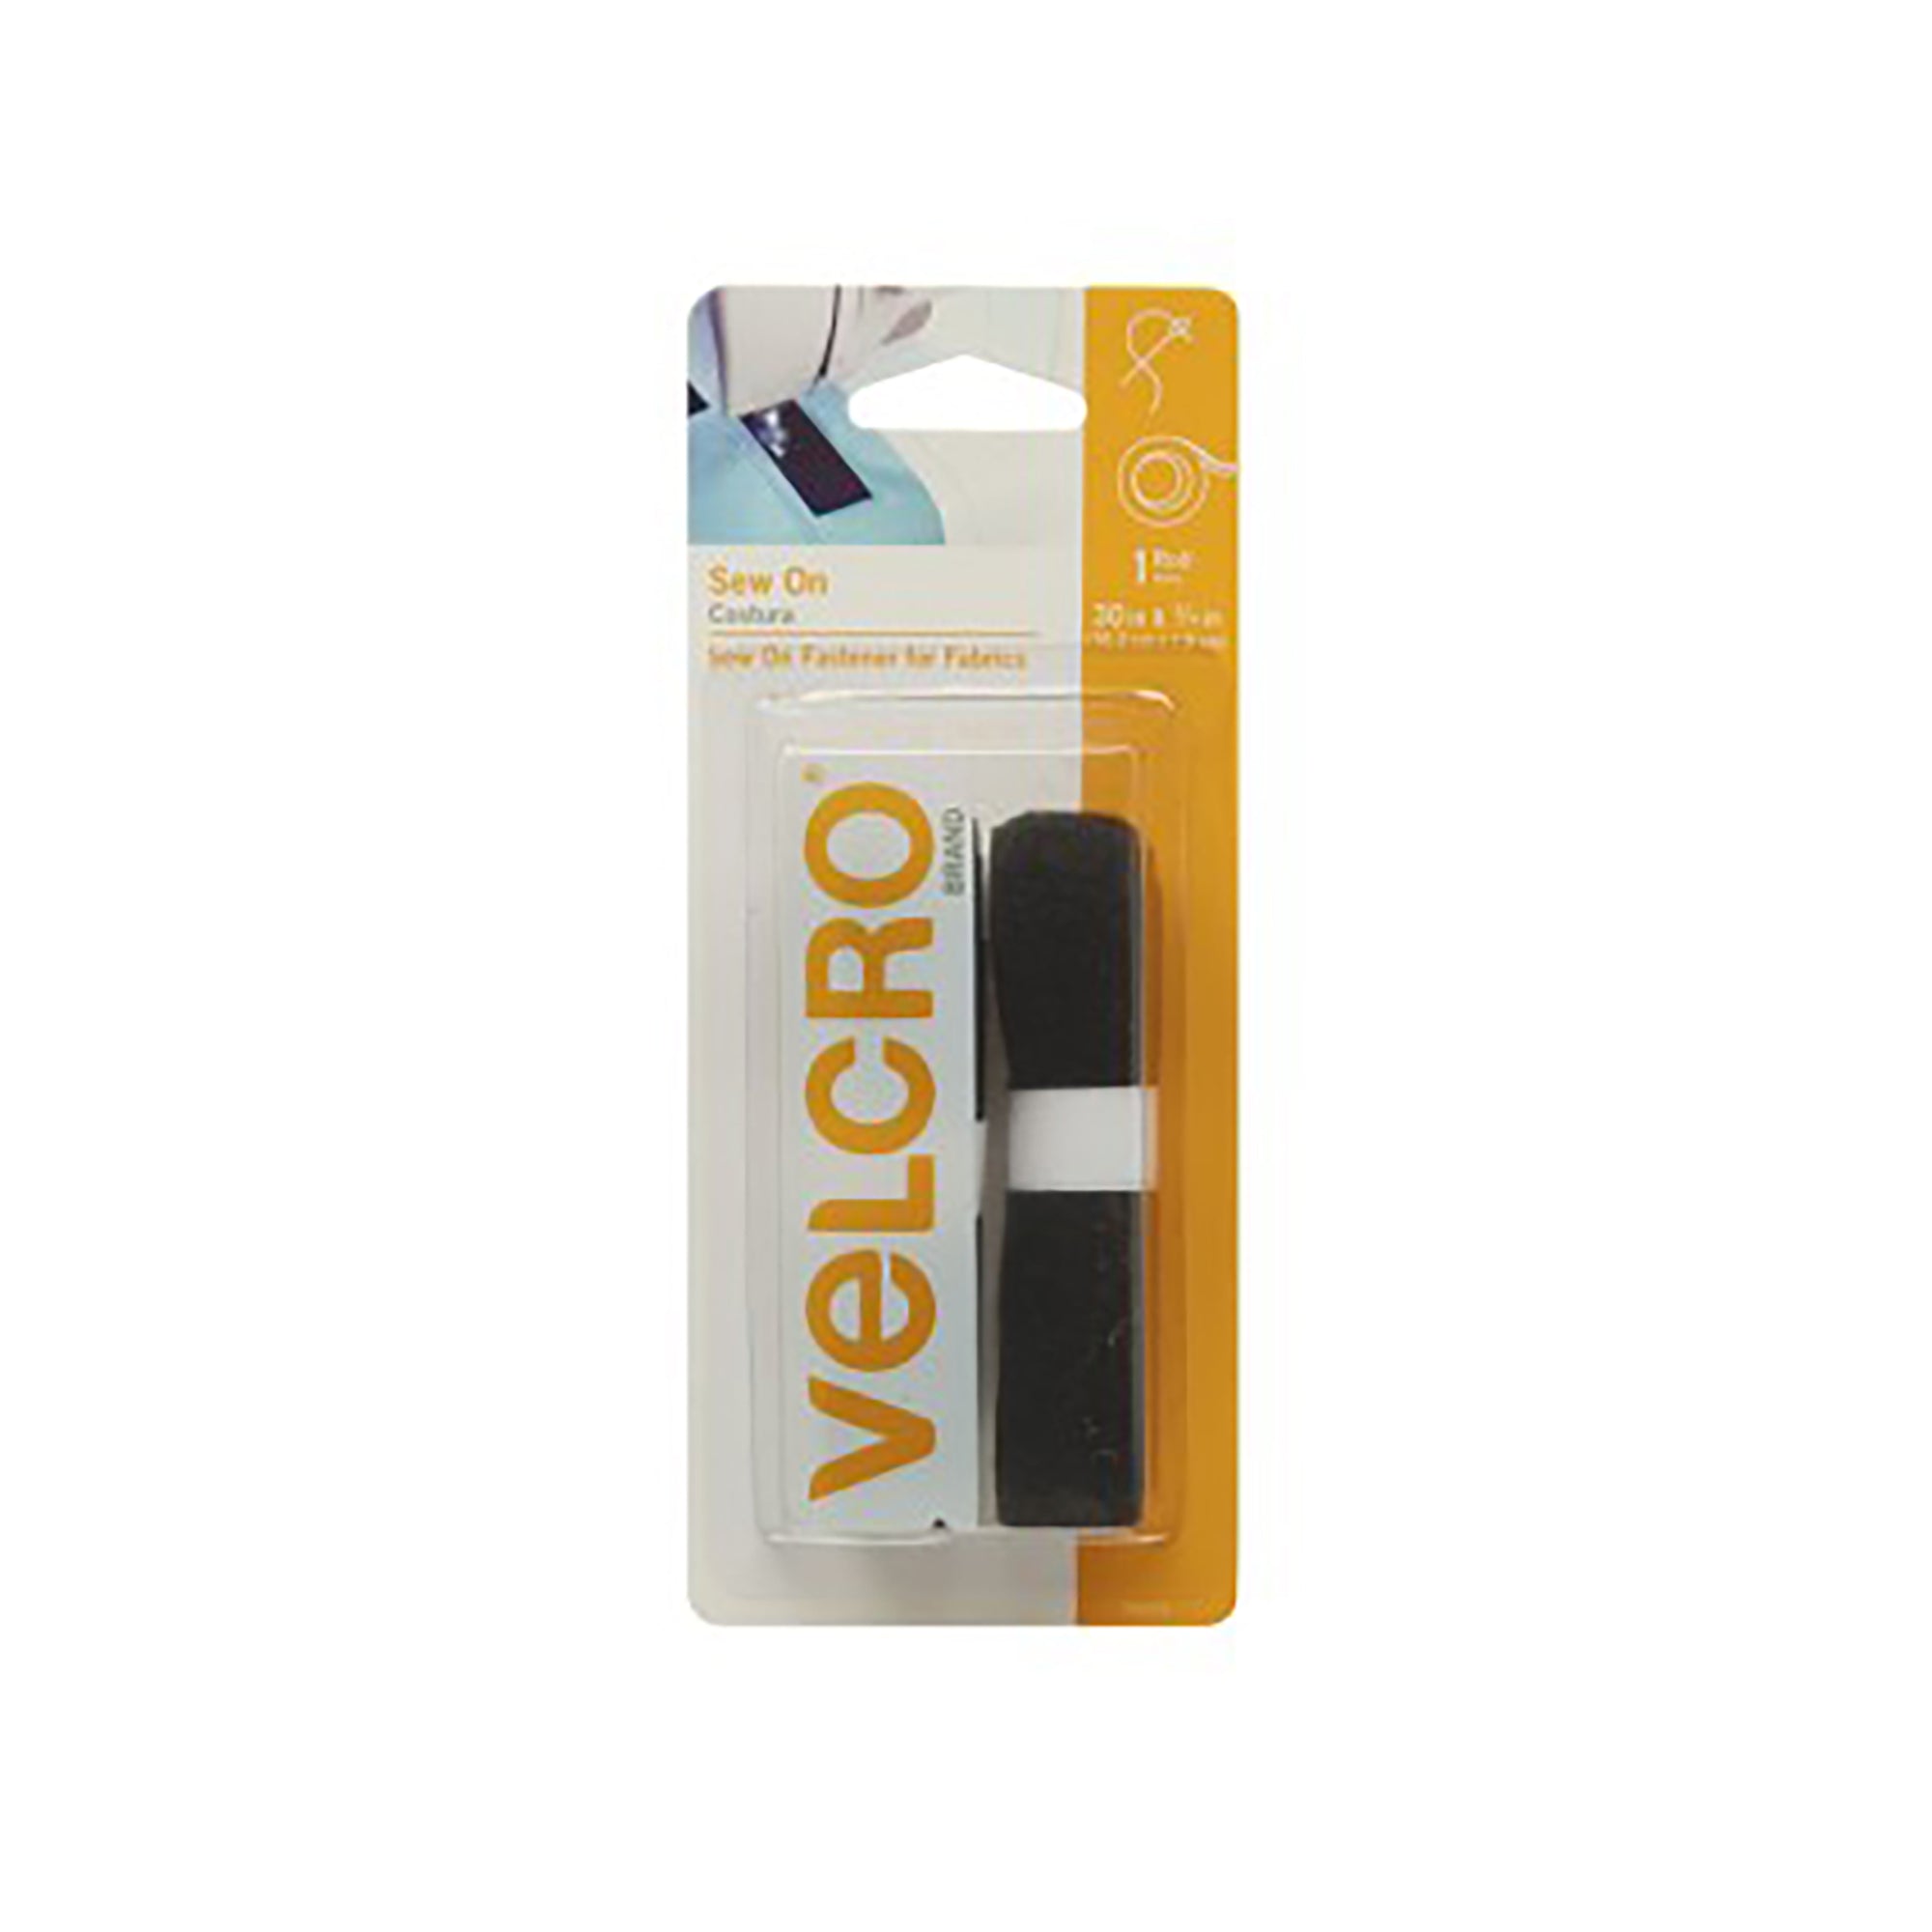 Velcro Sew On Tape 30" x .75"